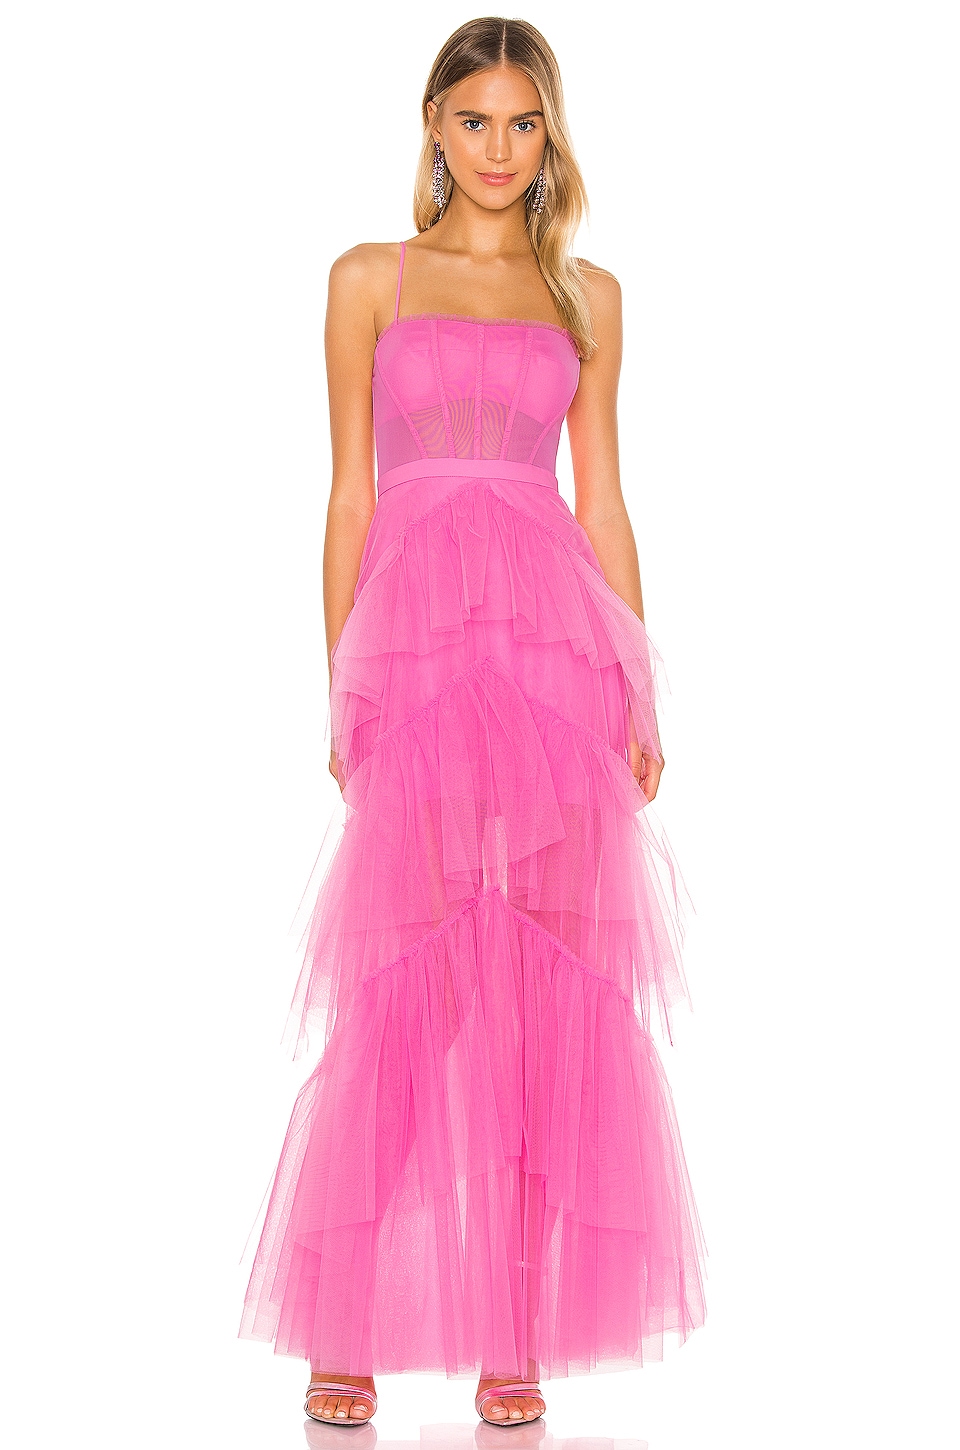 Bcbg prom Dress pink